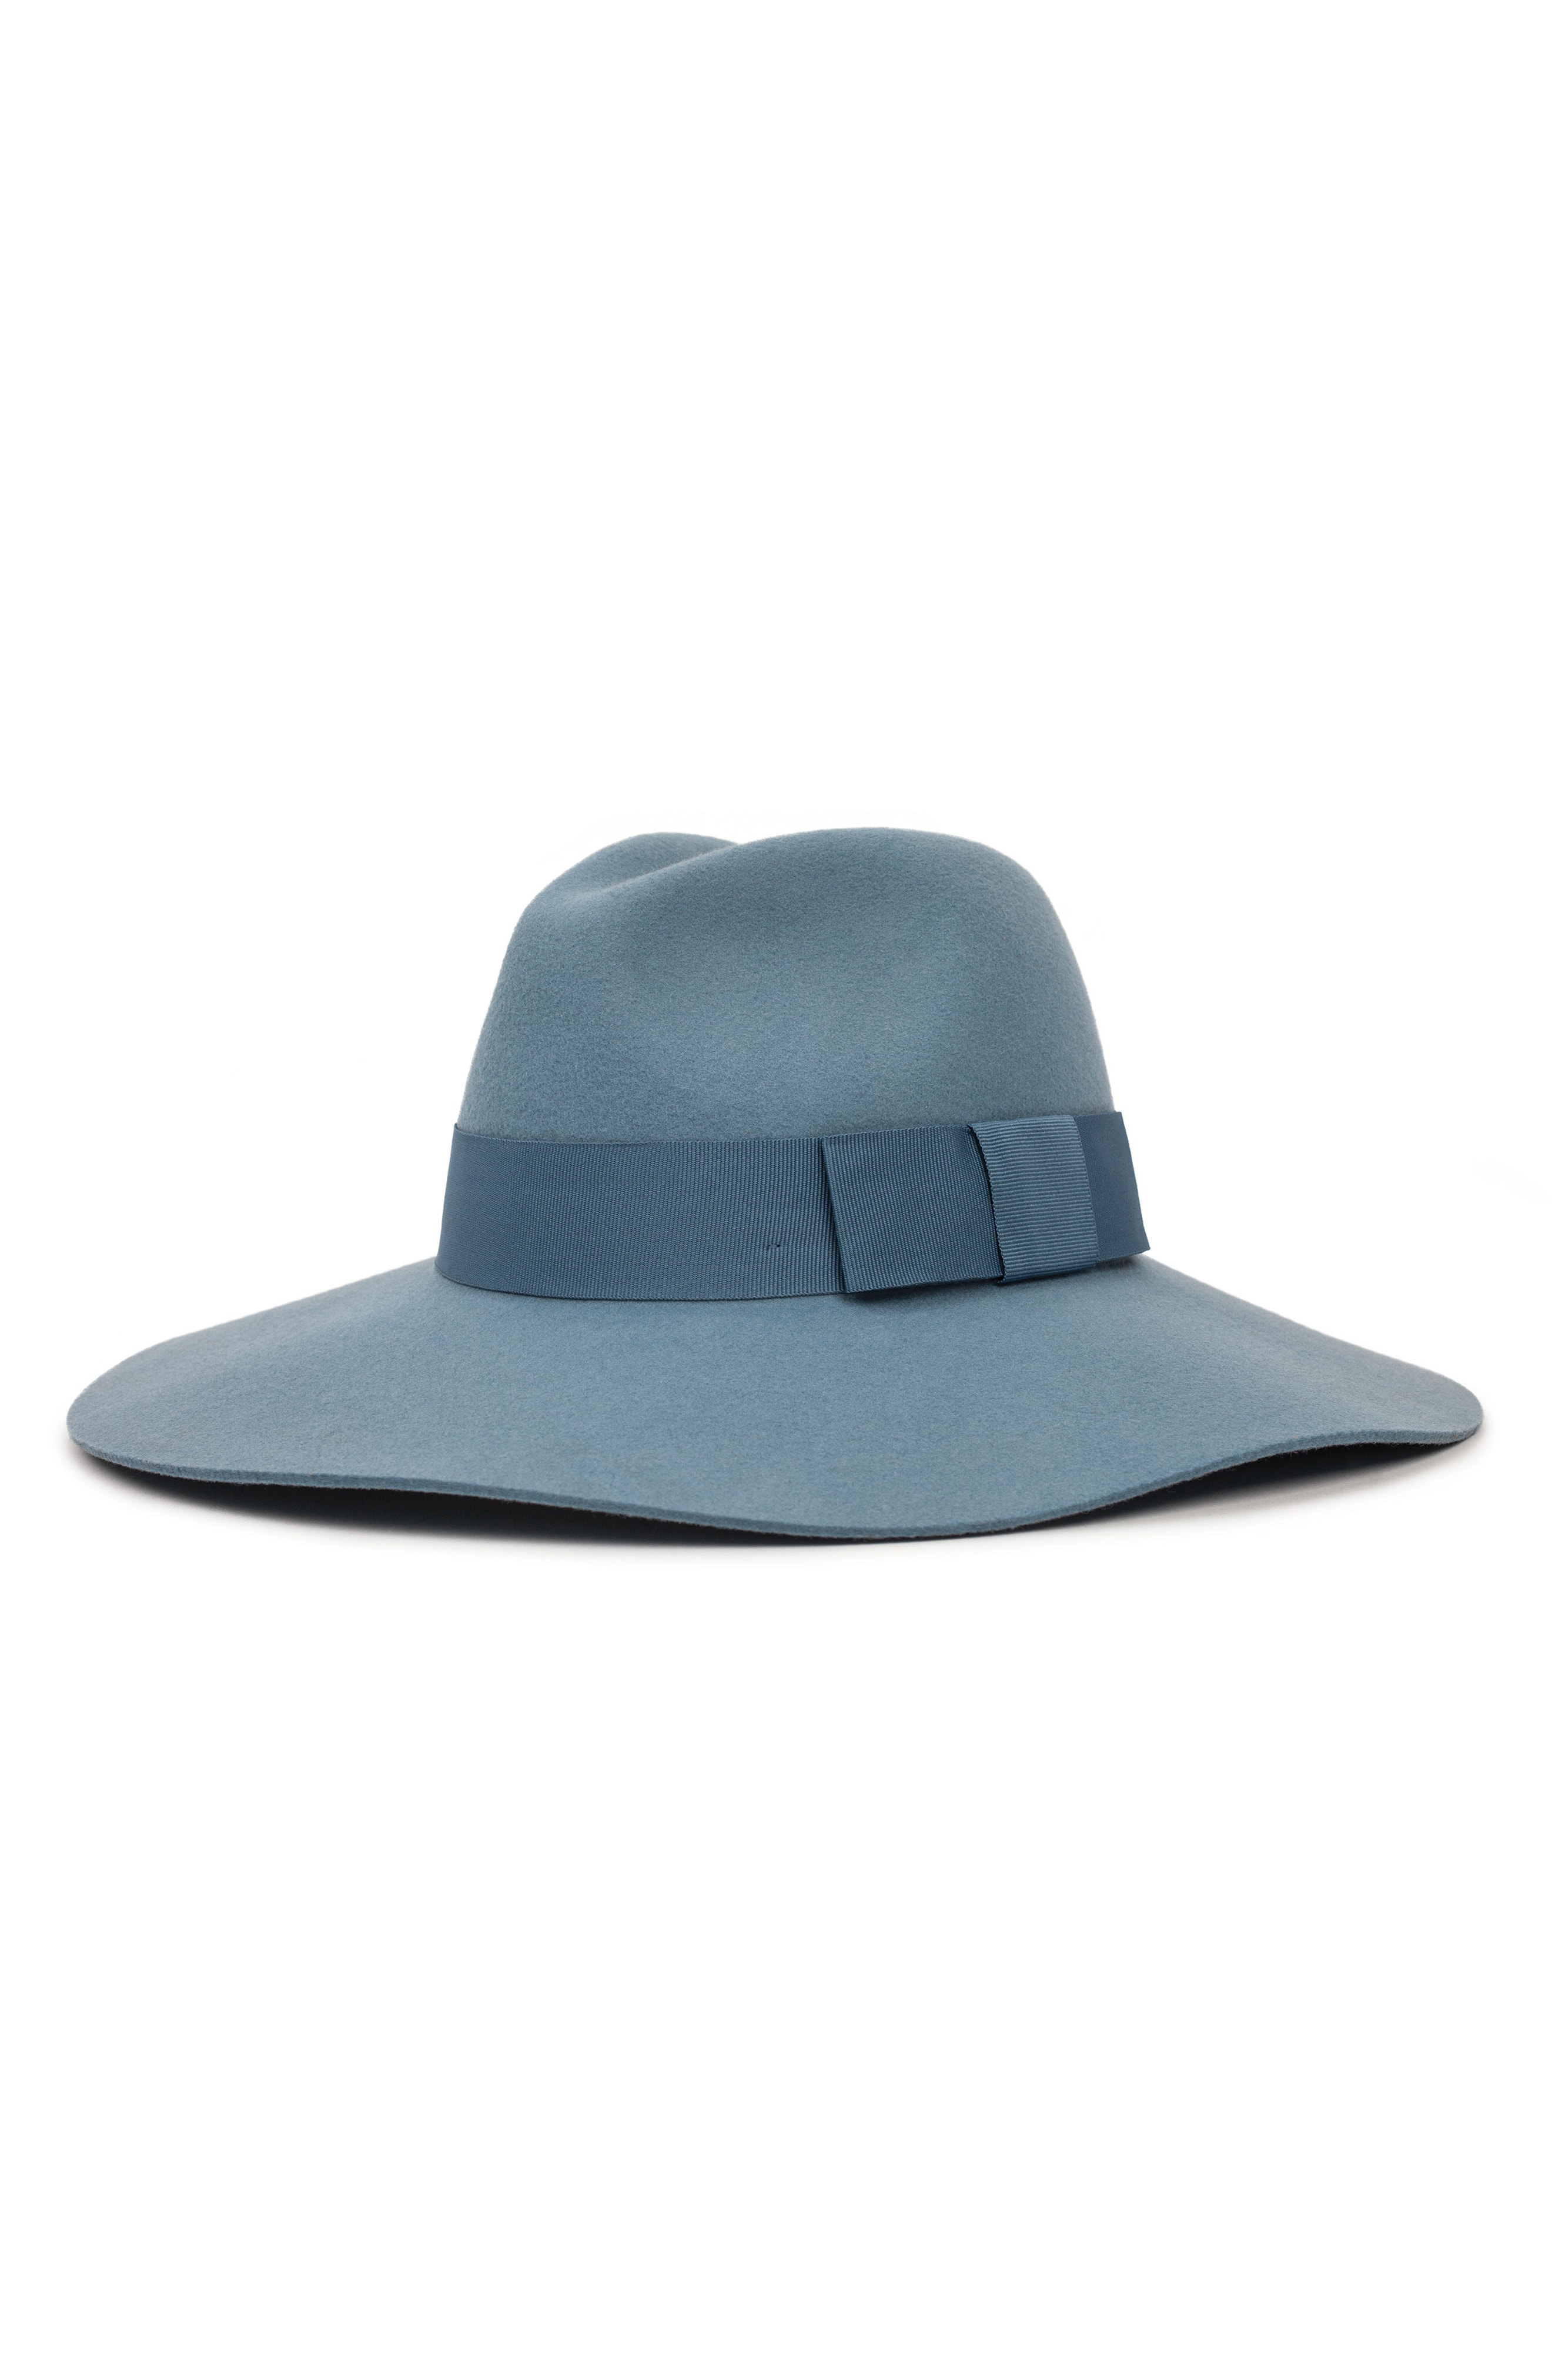 Brixton 'Piper' Floppy Wool Hat